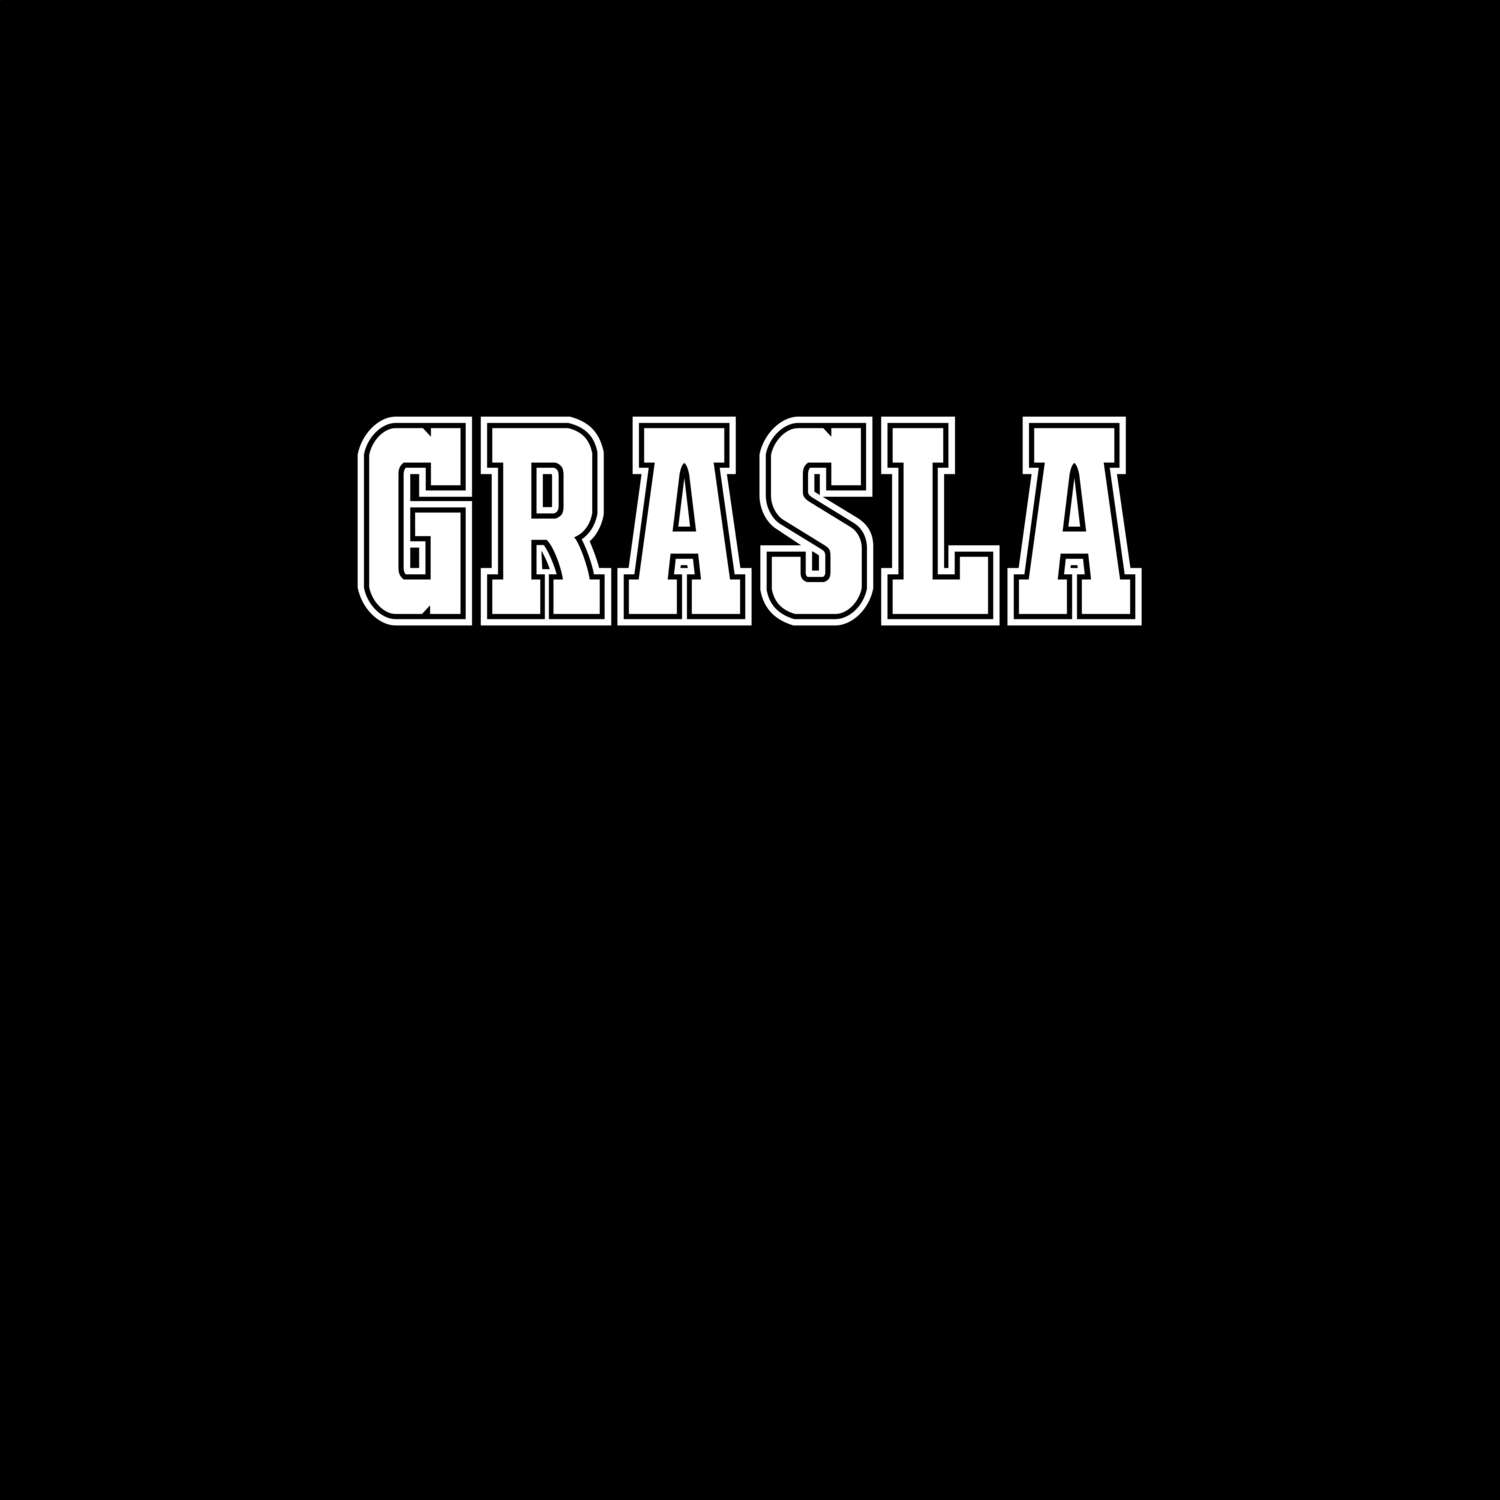 Grasla T-Shirt »Classic«